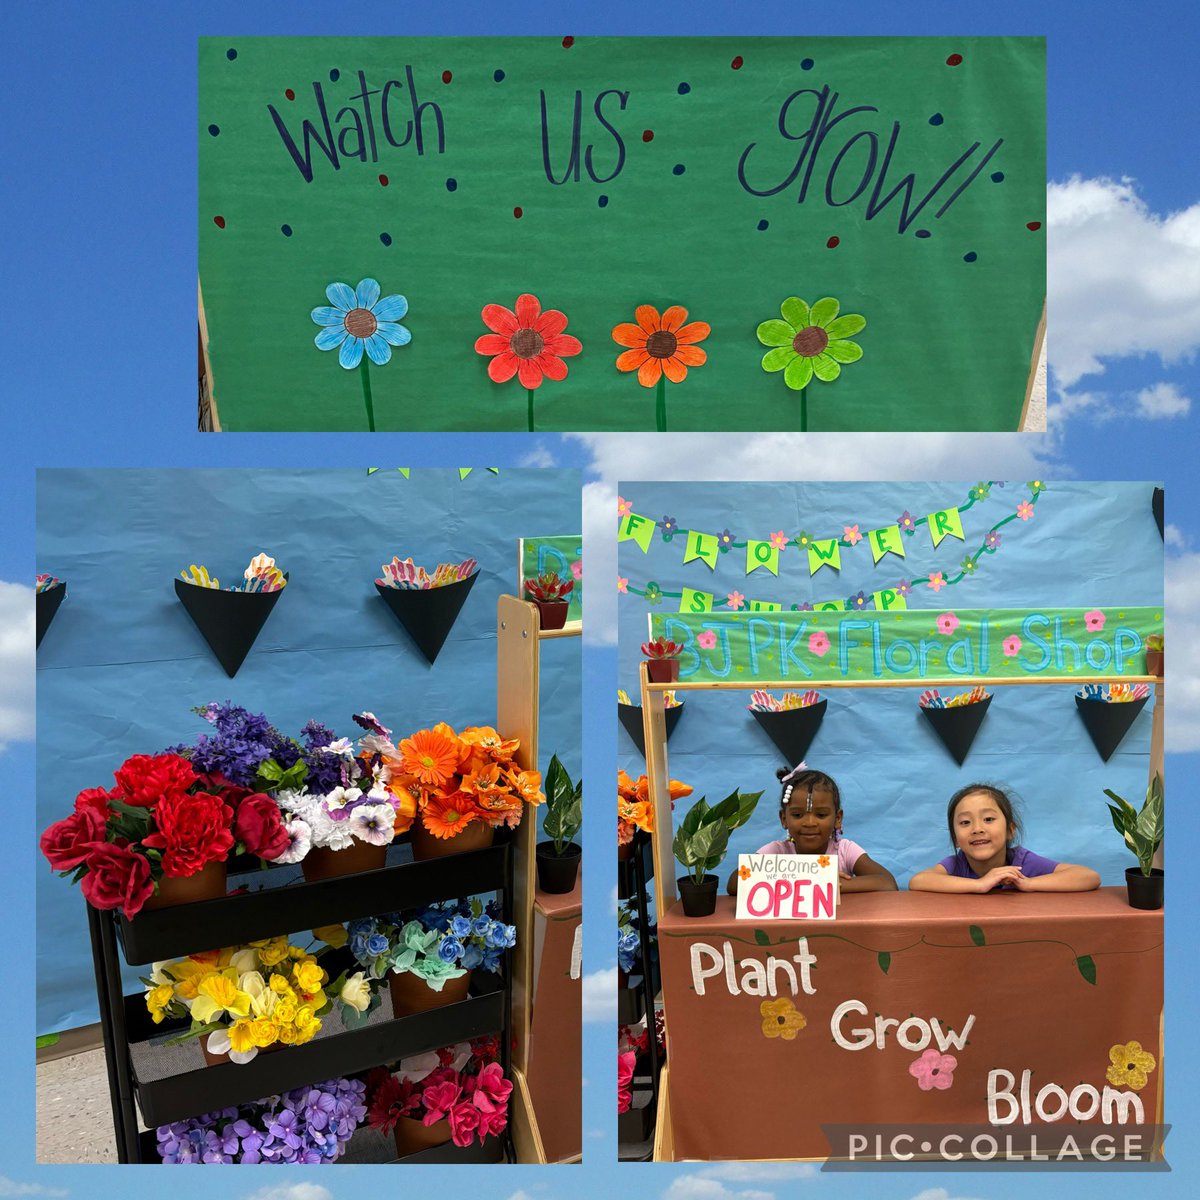 The BJE PreK Flower Shop is open for business! #watchusgrow 
#PrekisFUNdamental @FortBendISD @FBISDEarlyChild 
@BJEPrincipal